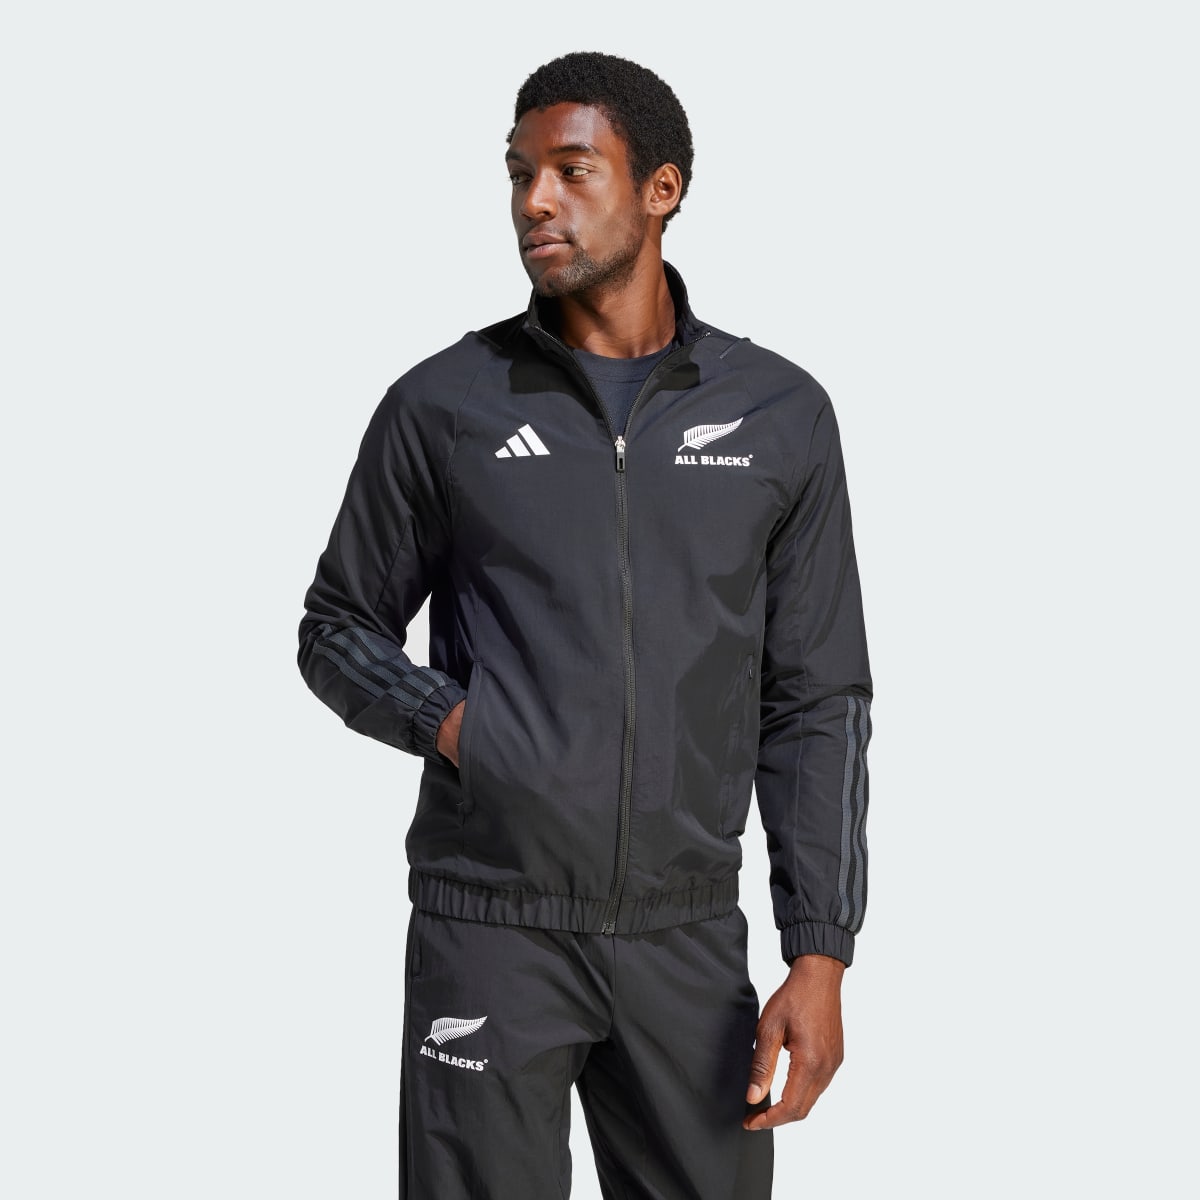 Adidas All Blacks Rugby Track Suit Jacket. 5